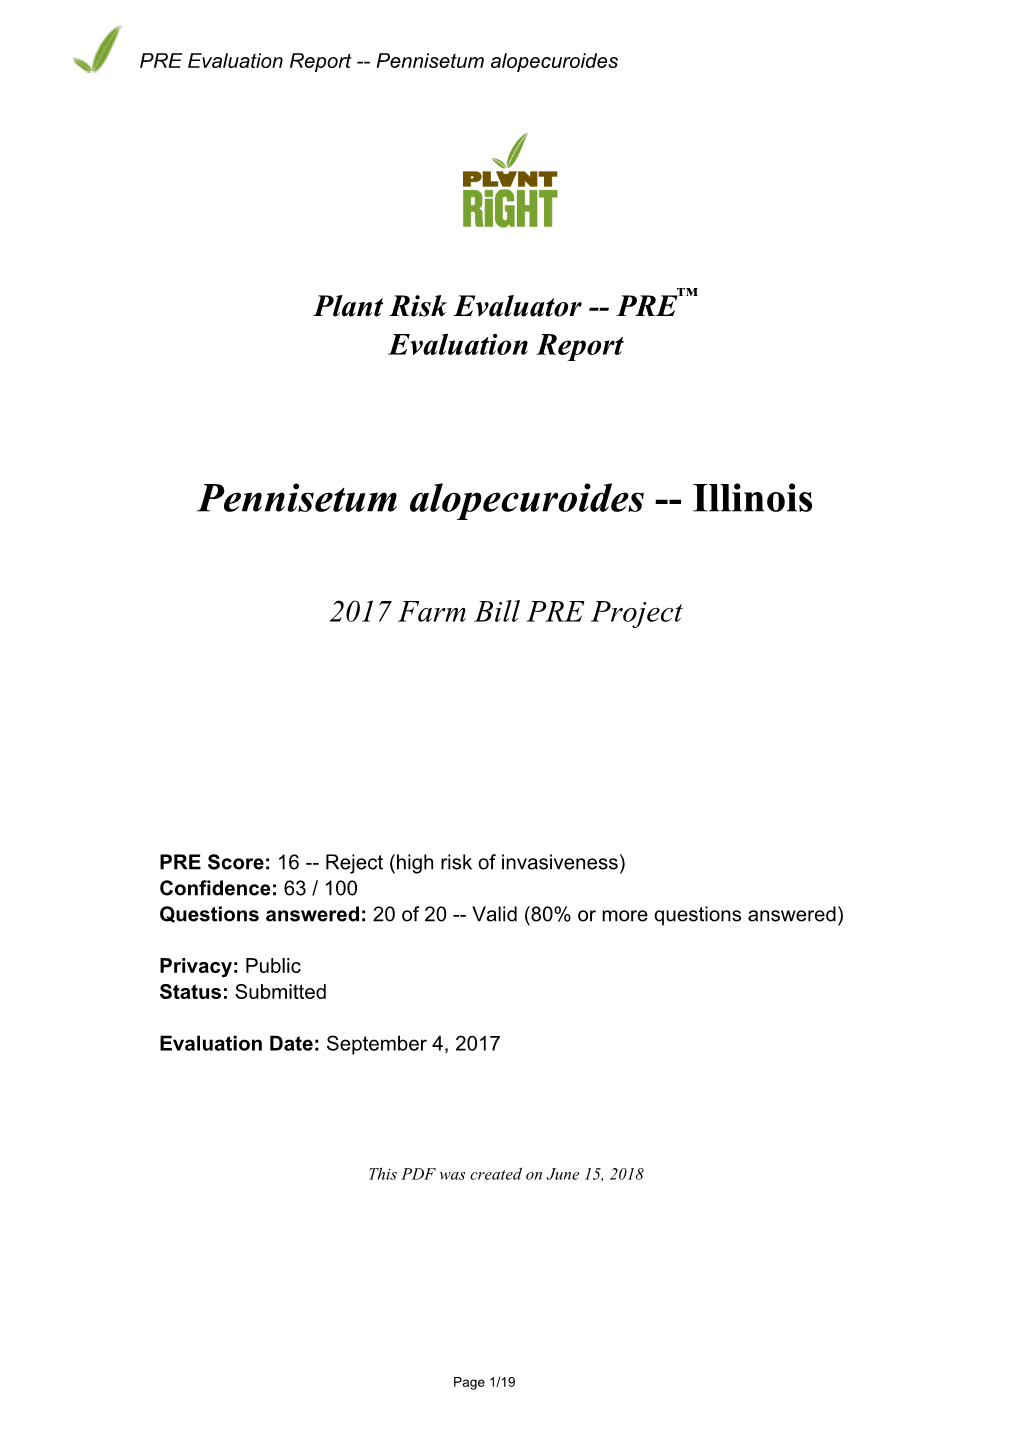 PRE Evaluation Report for Pennisetum